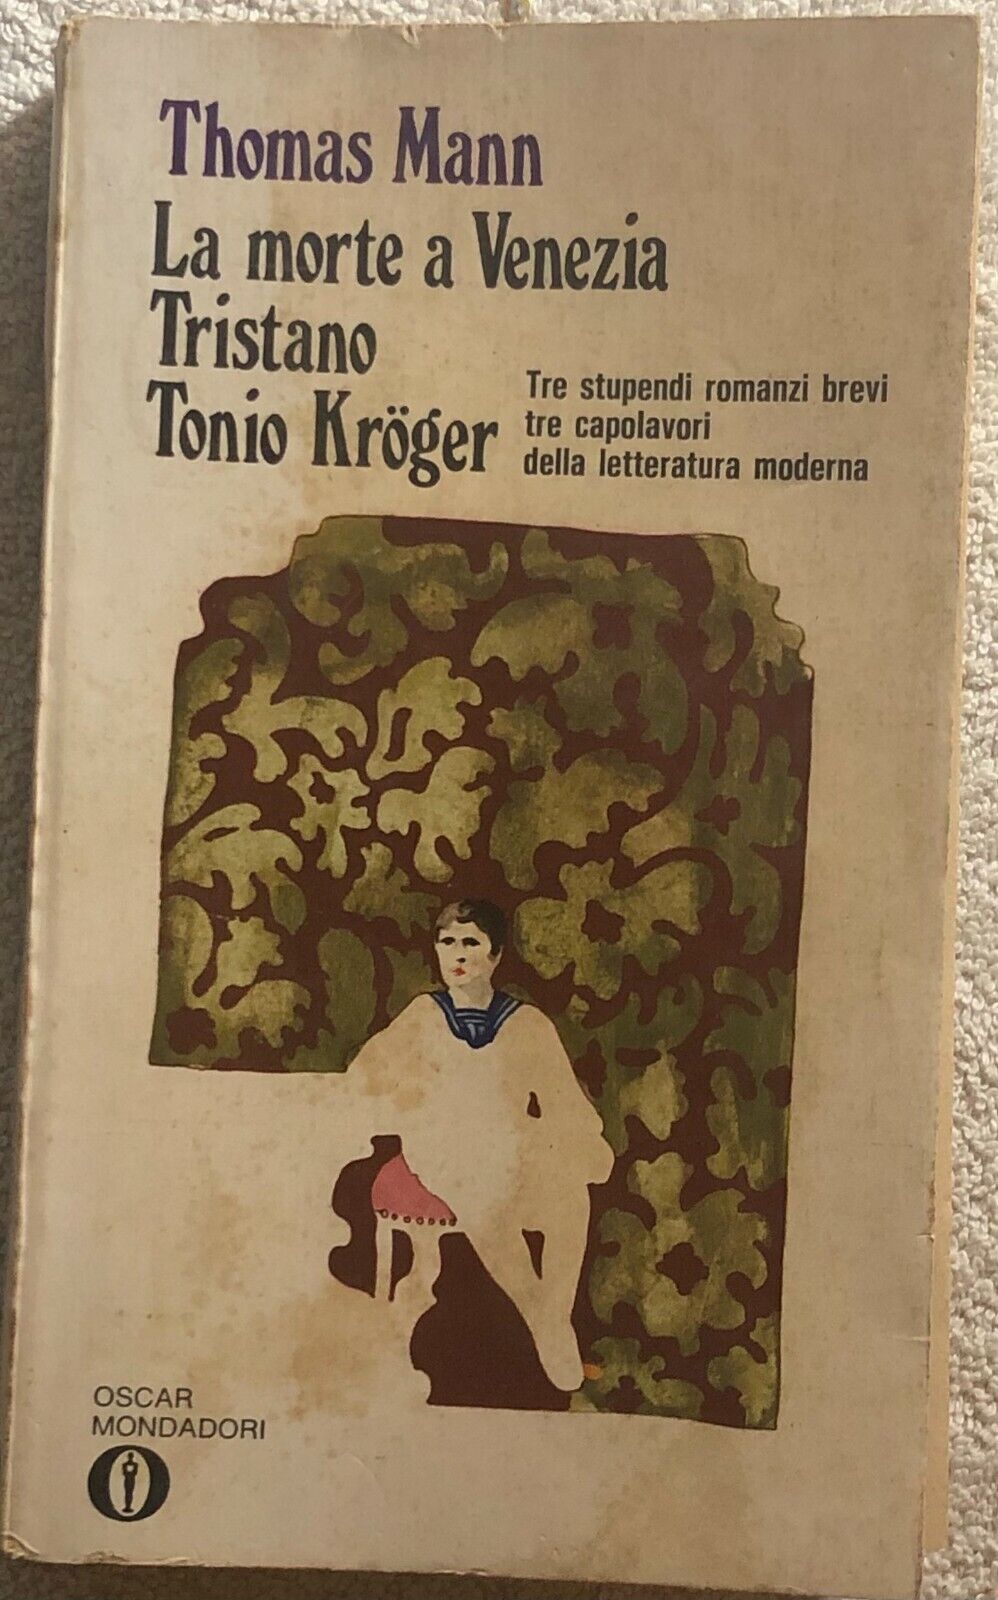 La morte a Venezia - Tristano - Tonio Kroger di Thomas Mann,  1974,  Mondadori